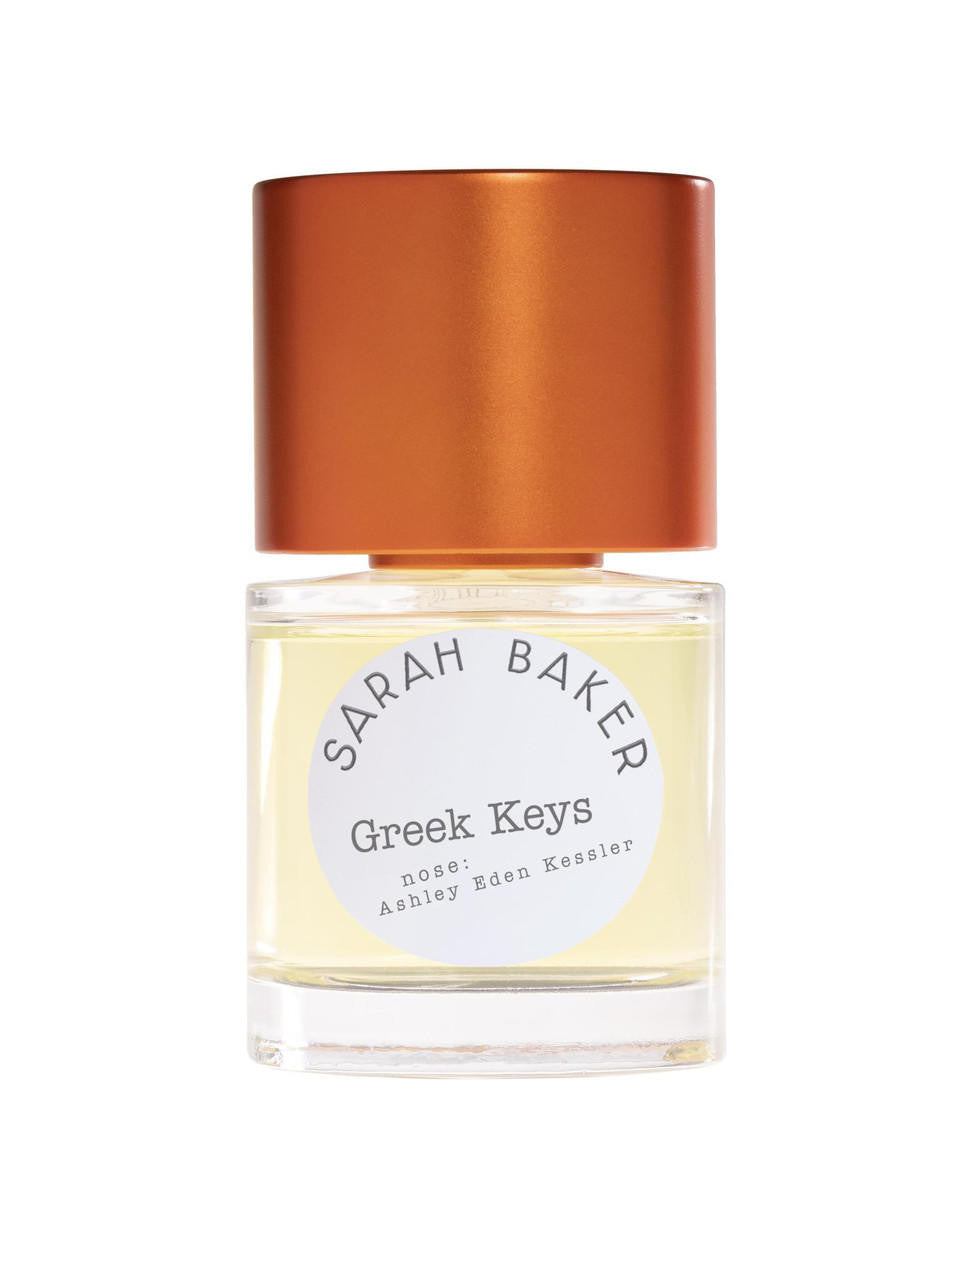  Sarah Baker Greek Keys Extrait de Parfum 